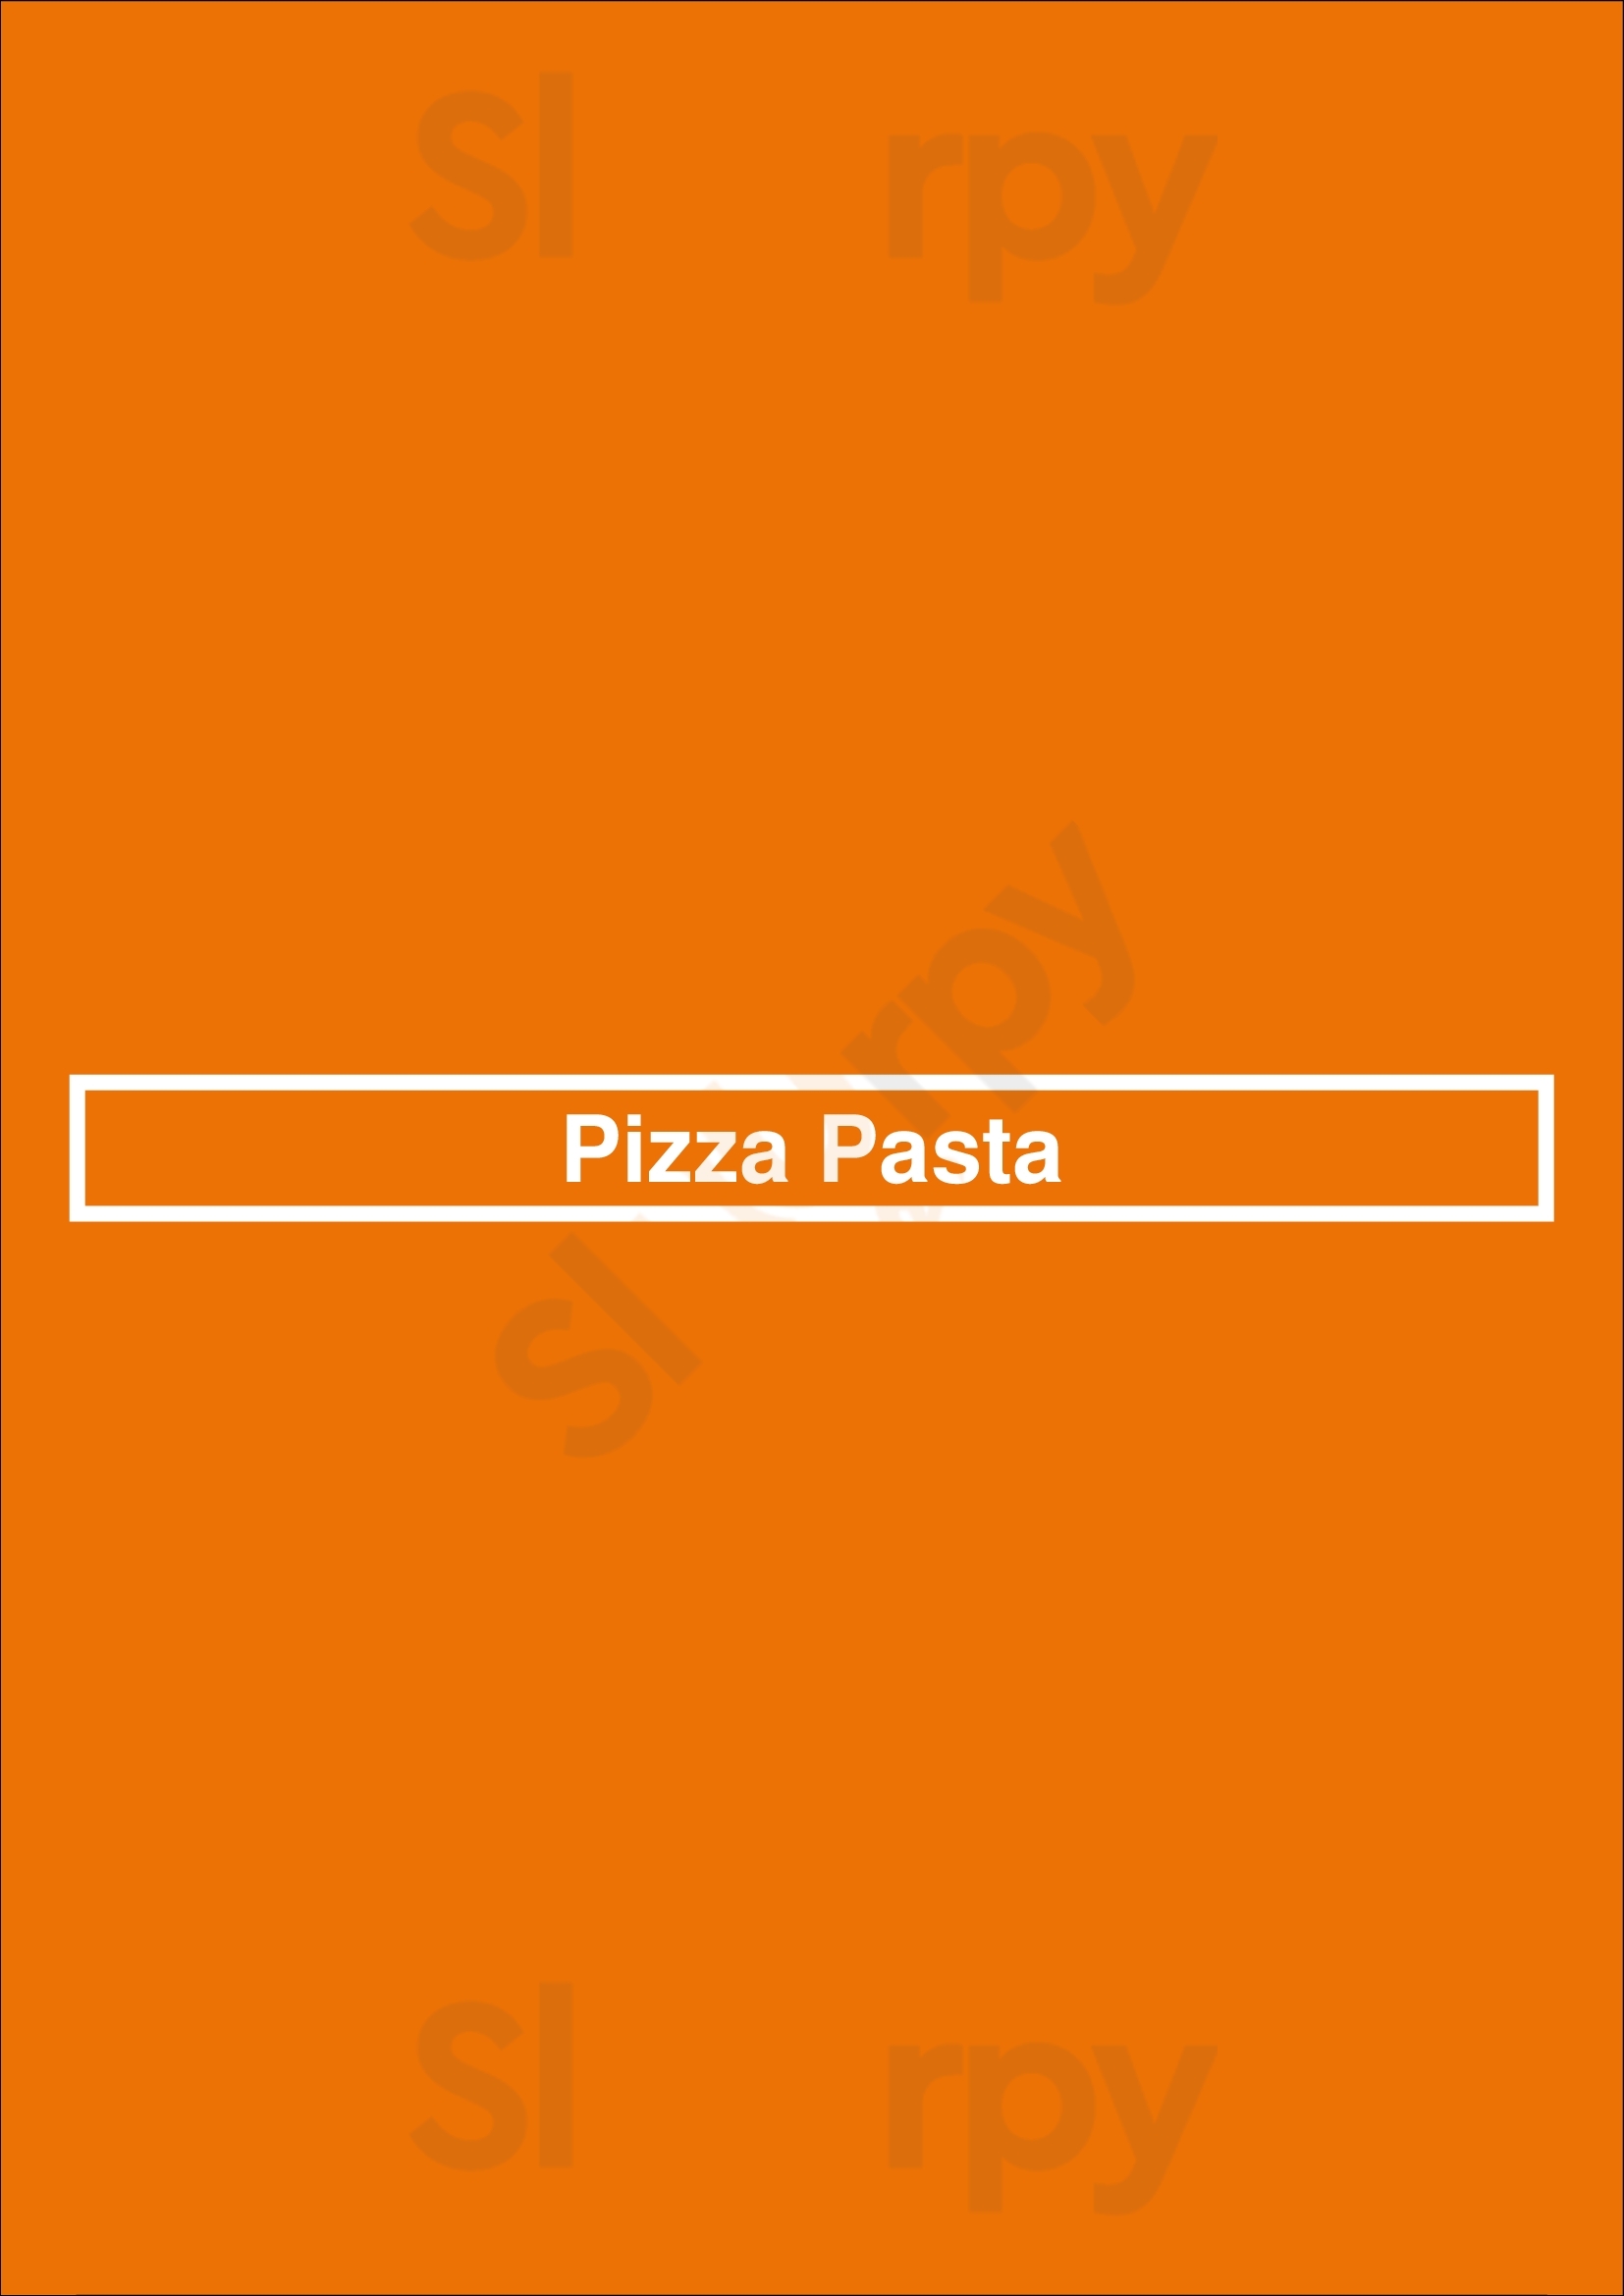 Pizza Pasta Nottingham Menu - 1